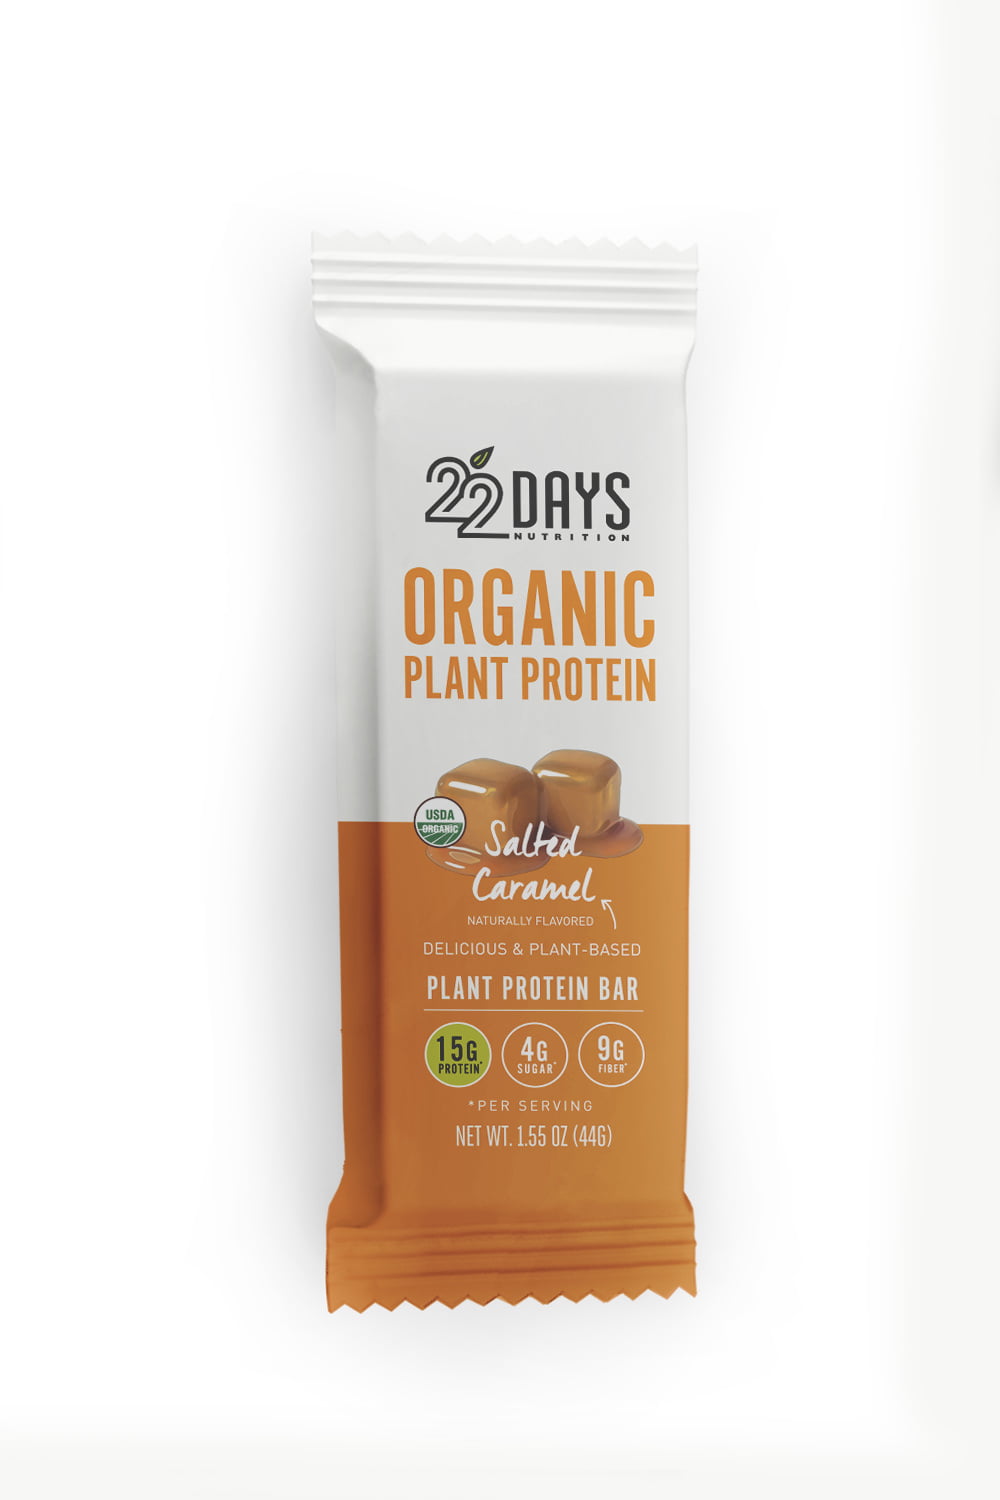 22 Days Nutrition Protein Bars- Salted Caramel 12 CT - Walmart.com